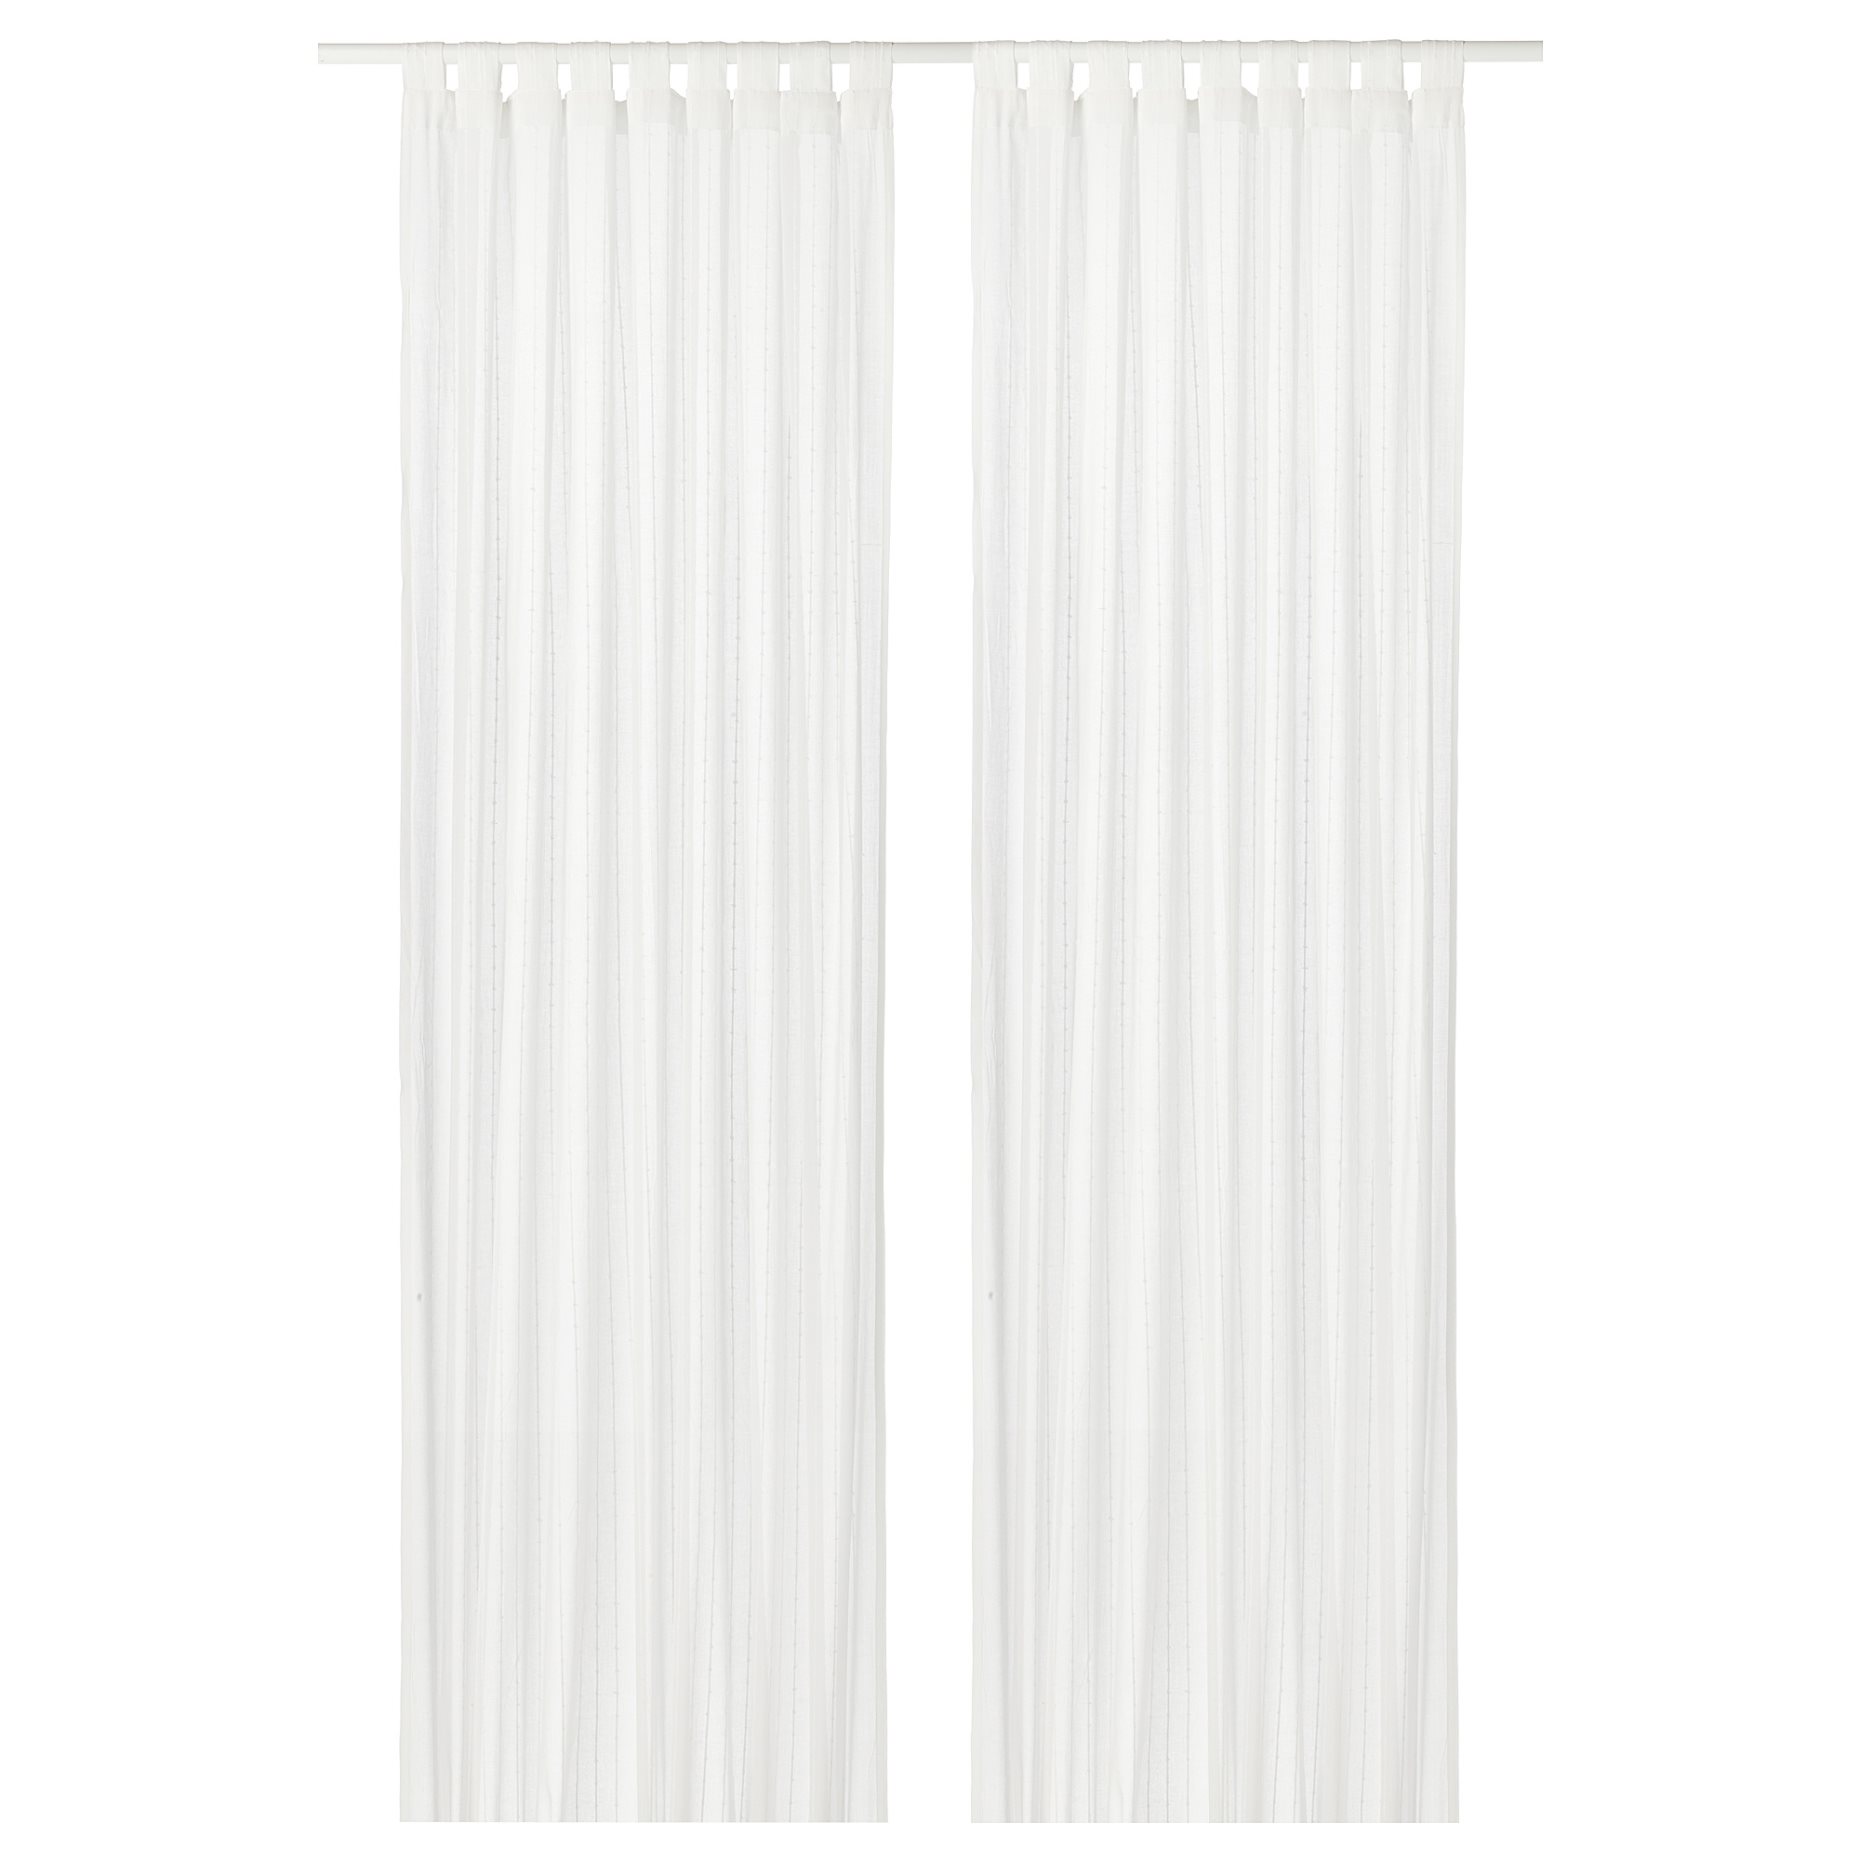 MATILDA, sheer curtains, 1 pair, 500.460.48